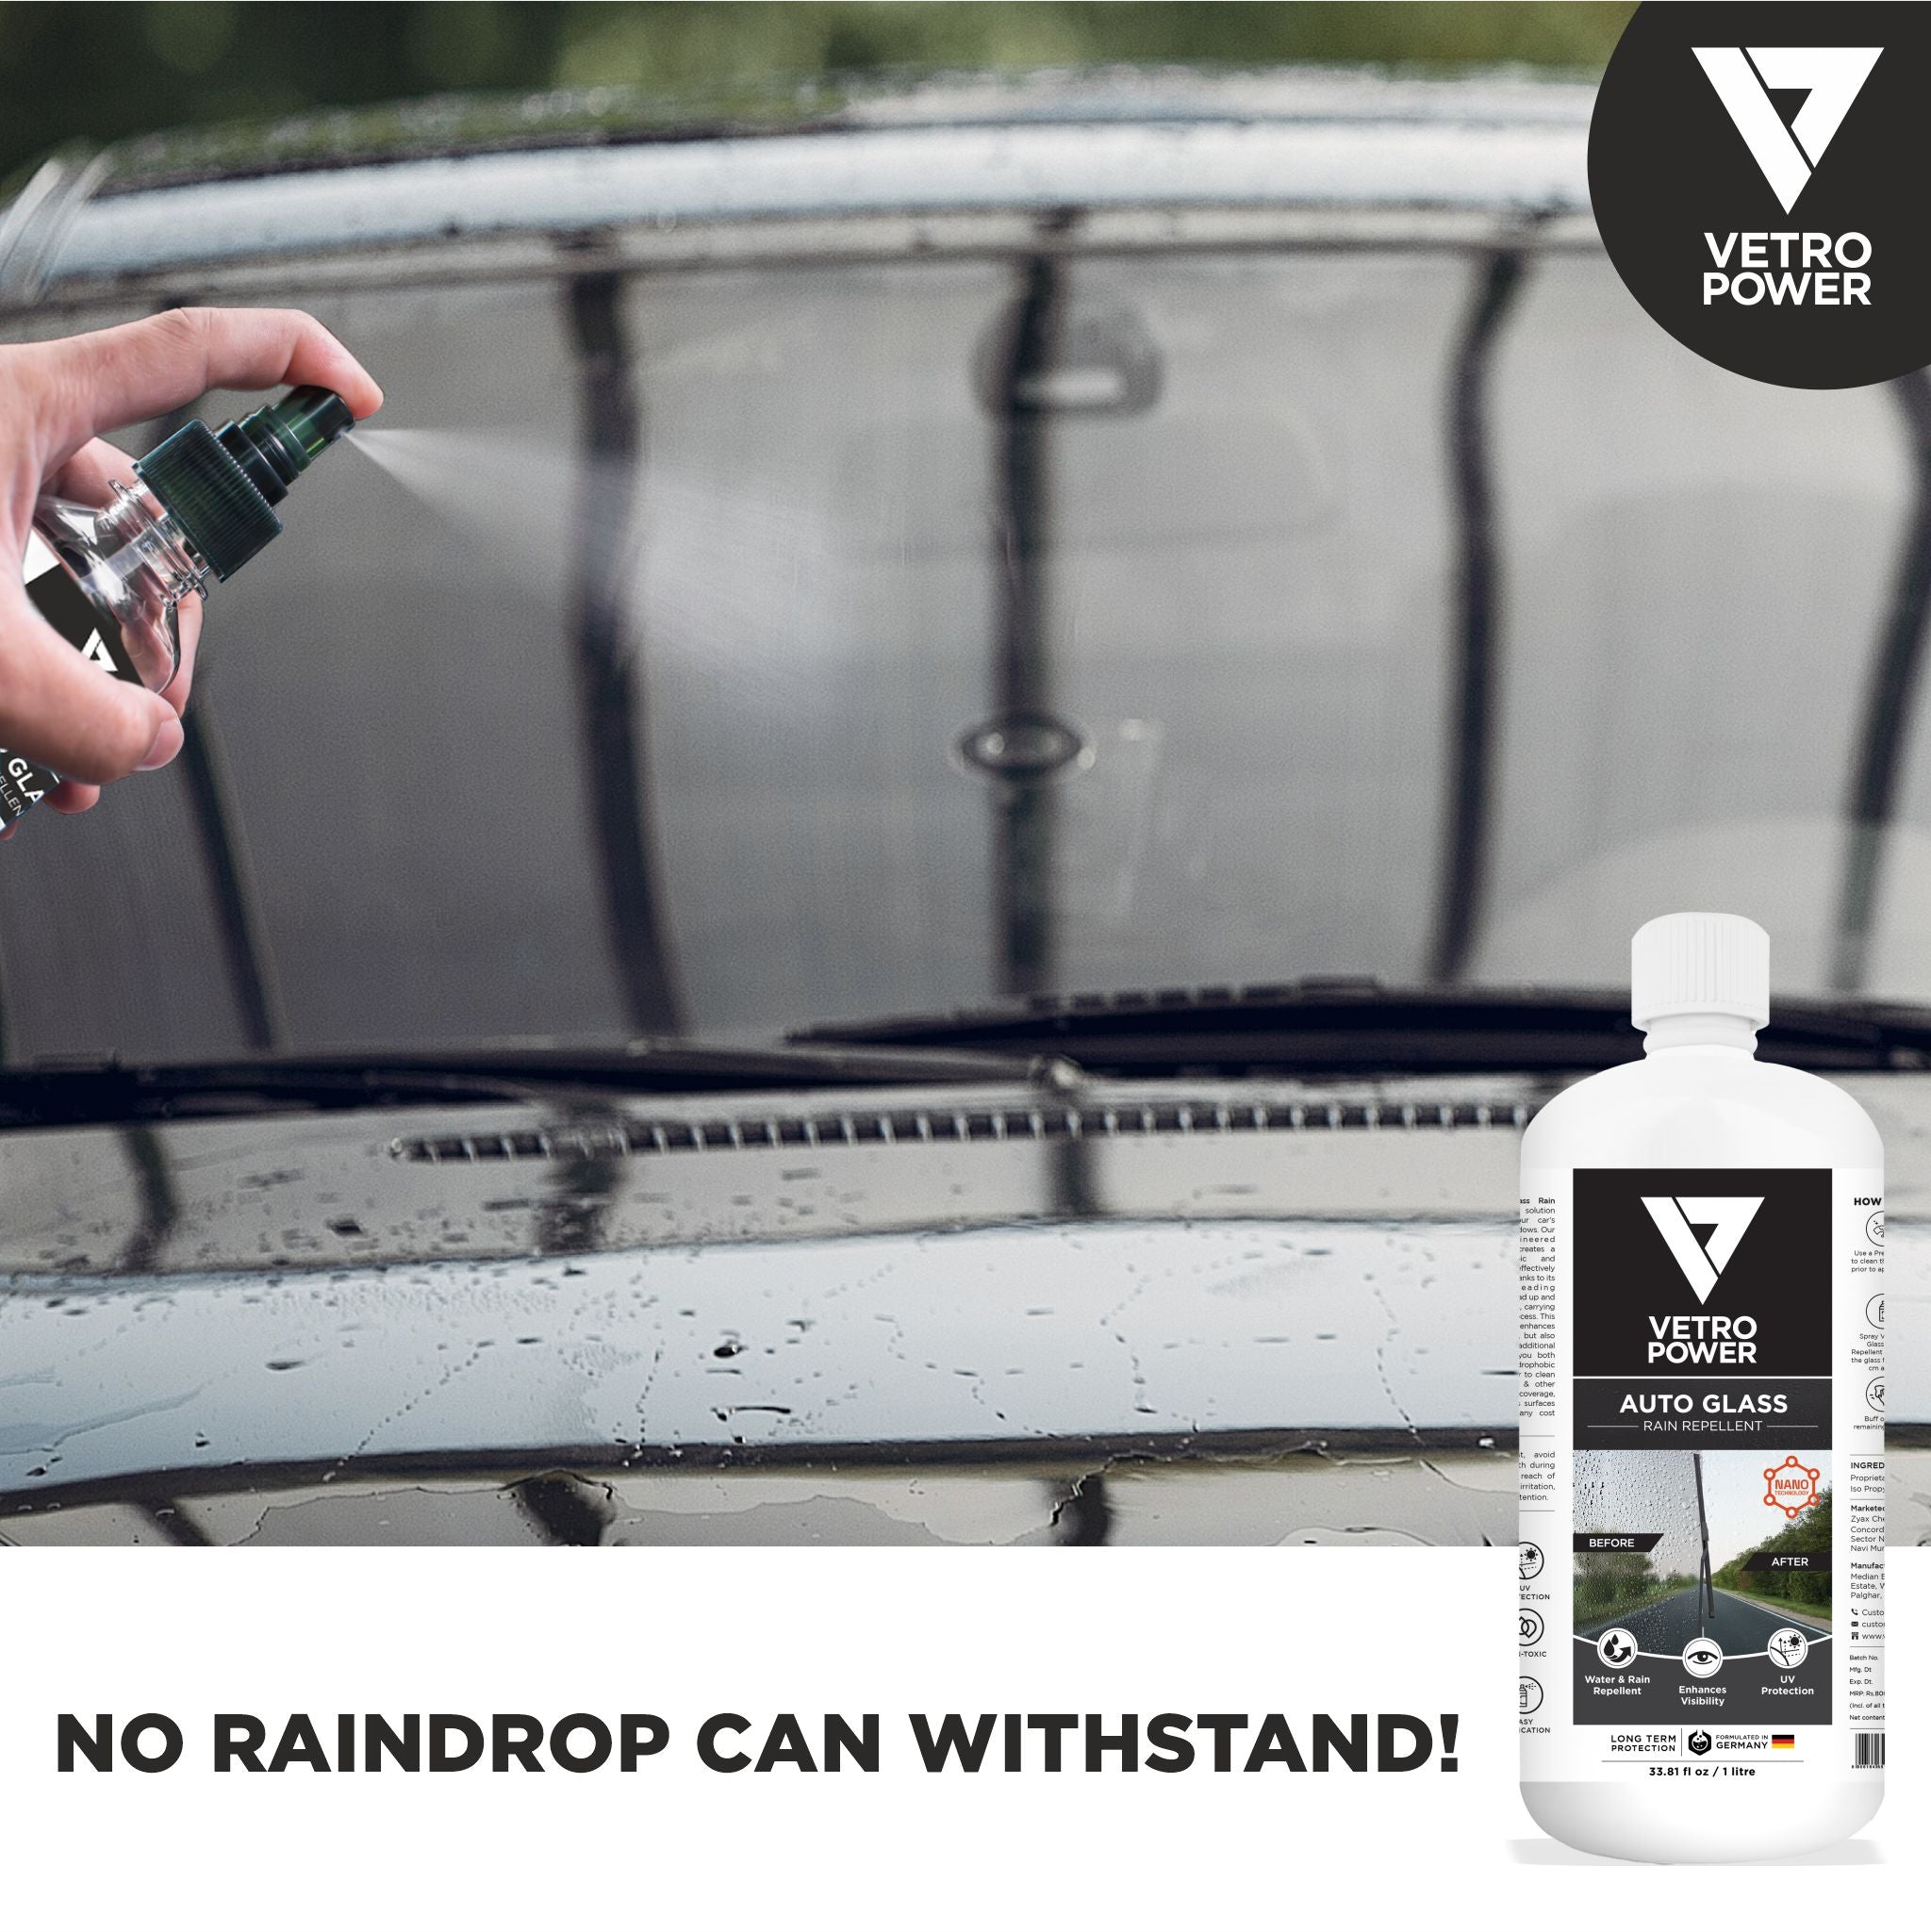 Vetro Power Auto Glass Rain Repellent Spray